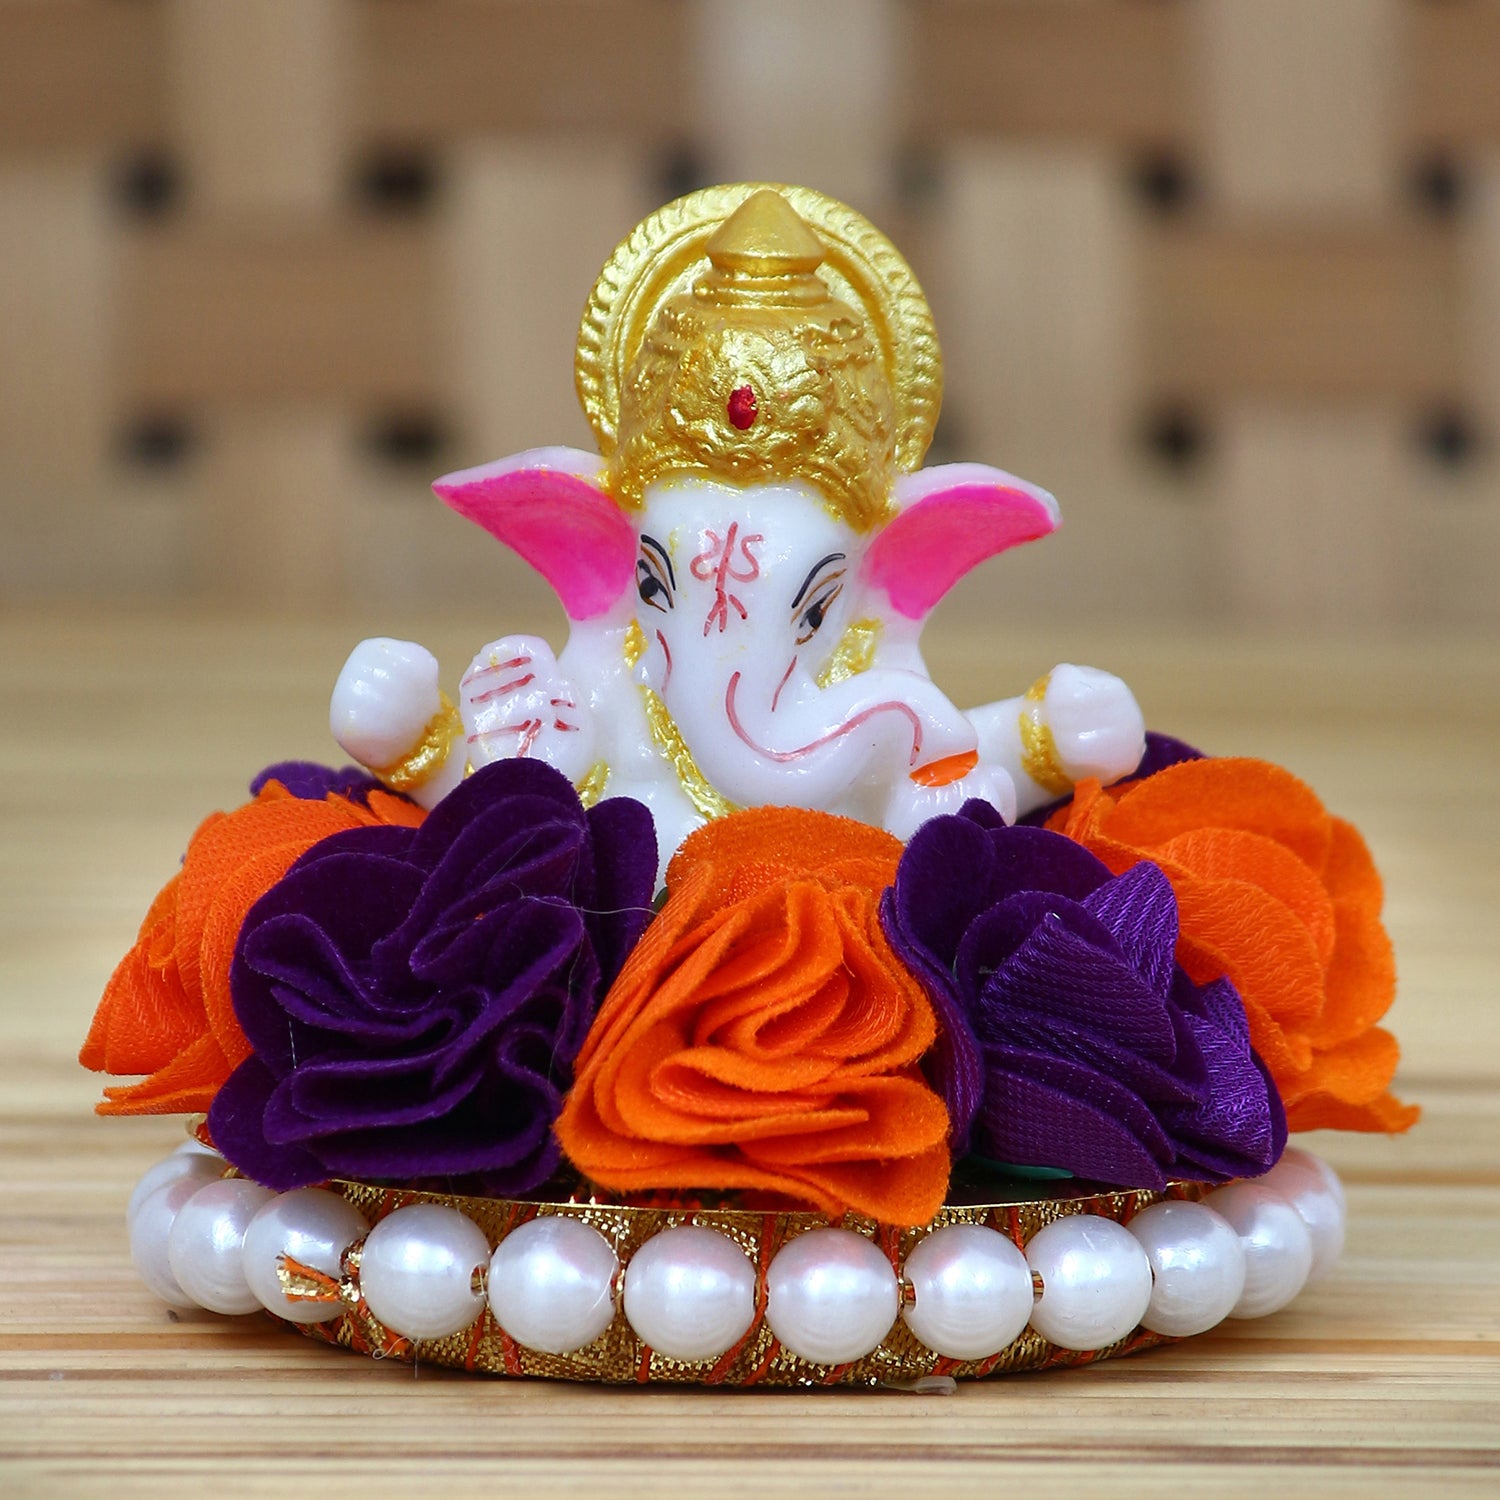 Lord Ganesha Idol On Decorative Handcrafted Orange And Purple Flowers Plate 1